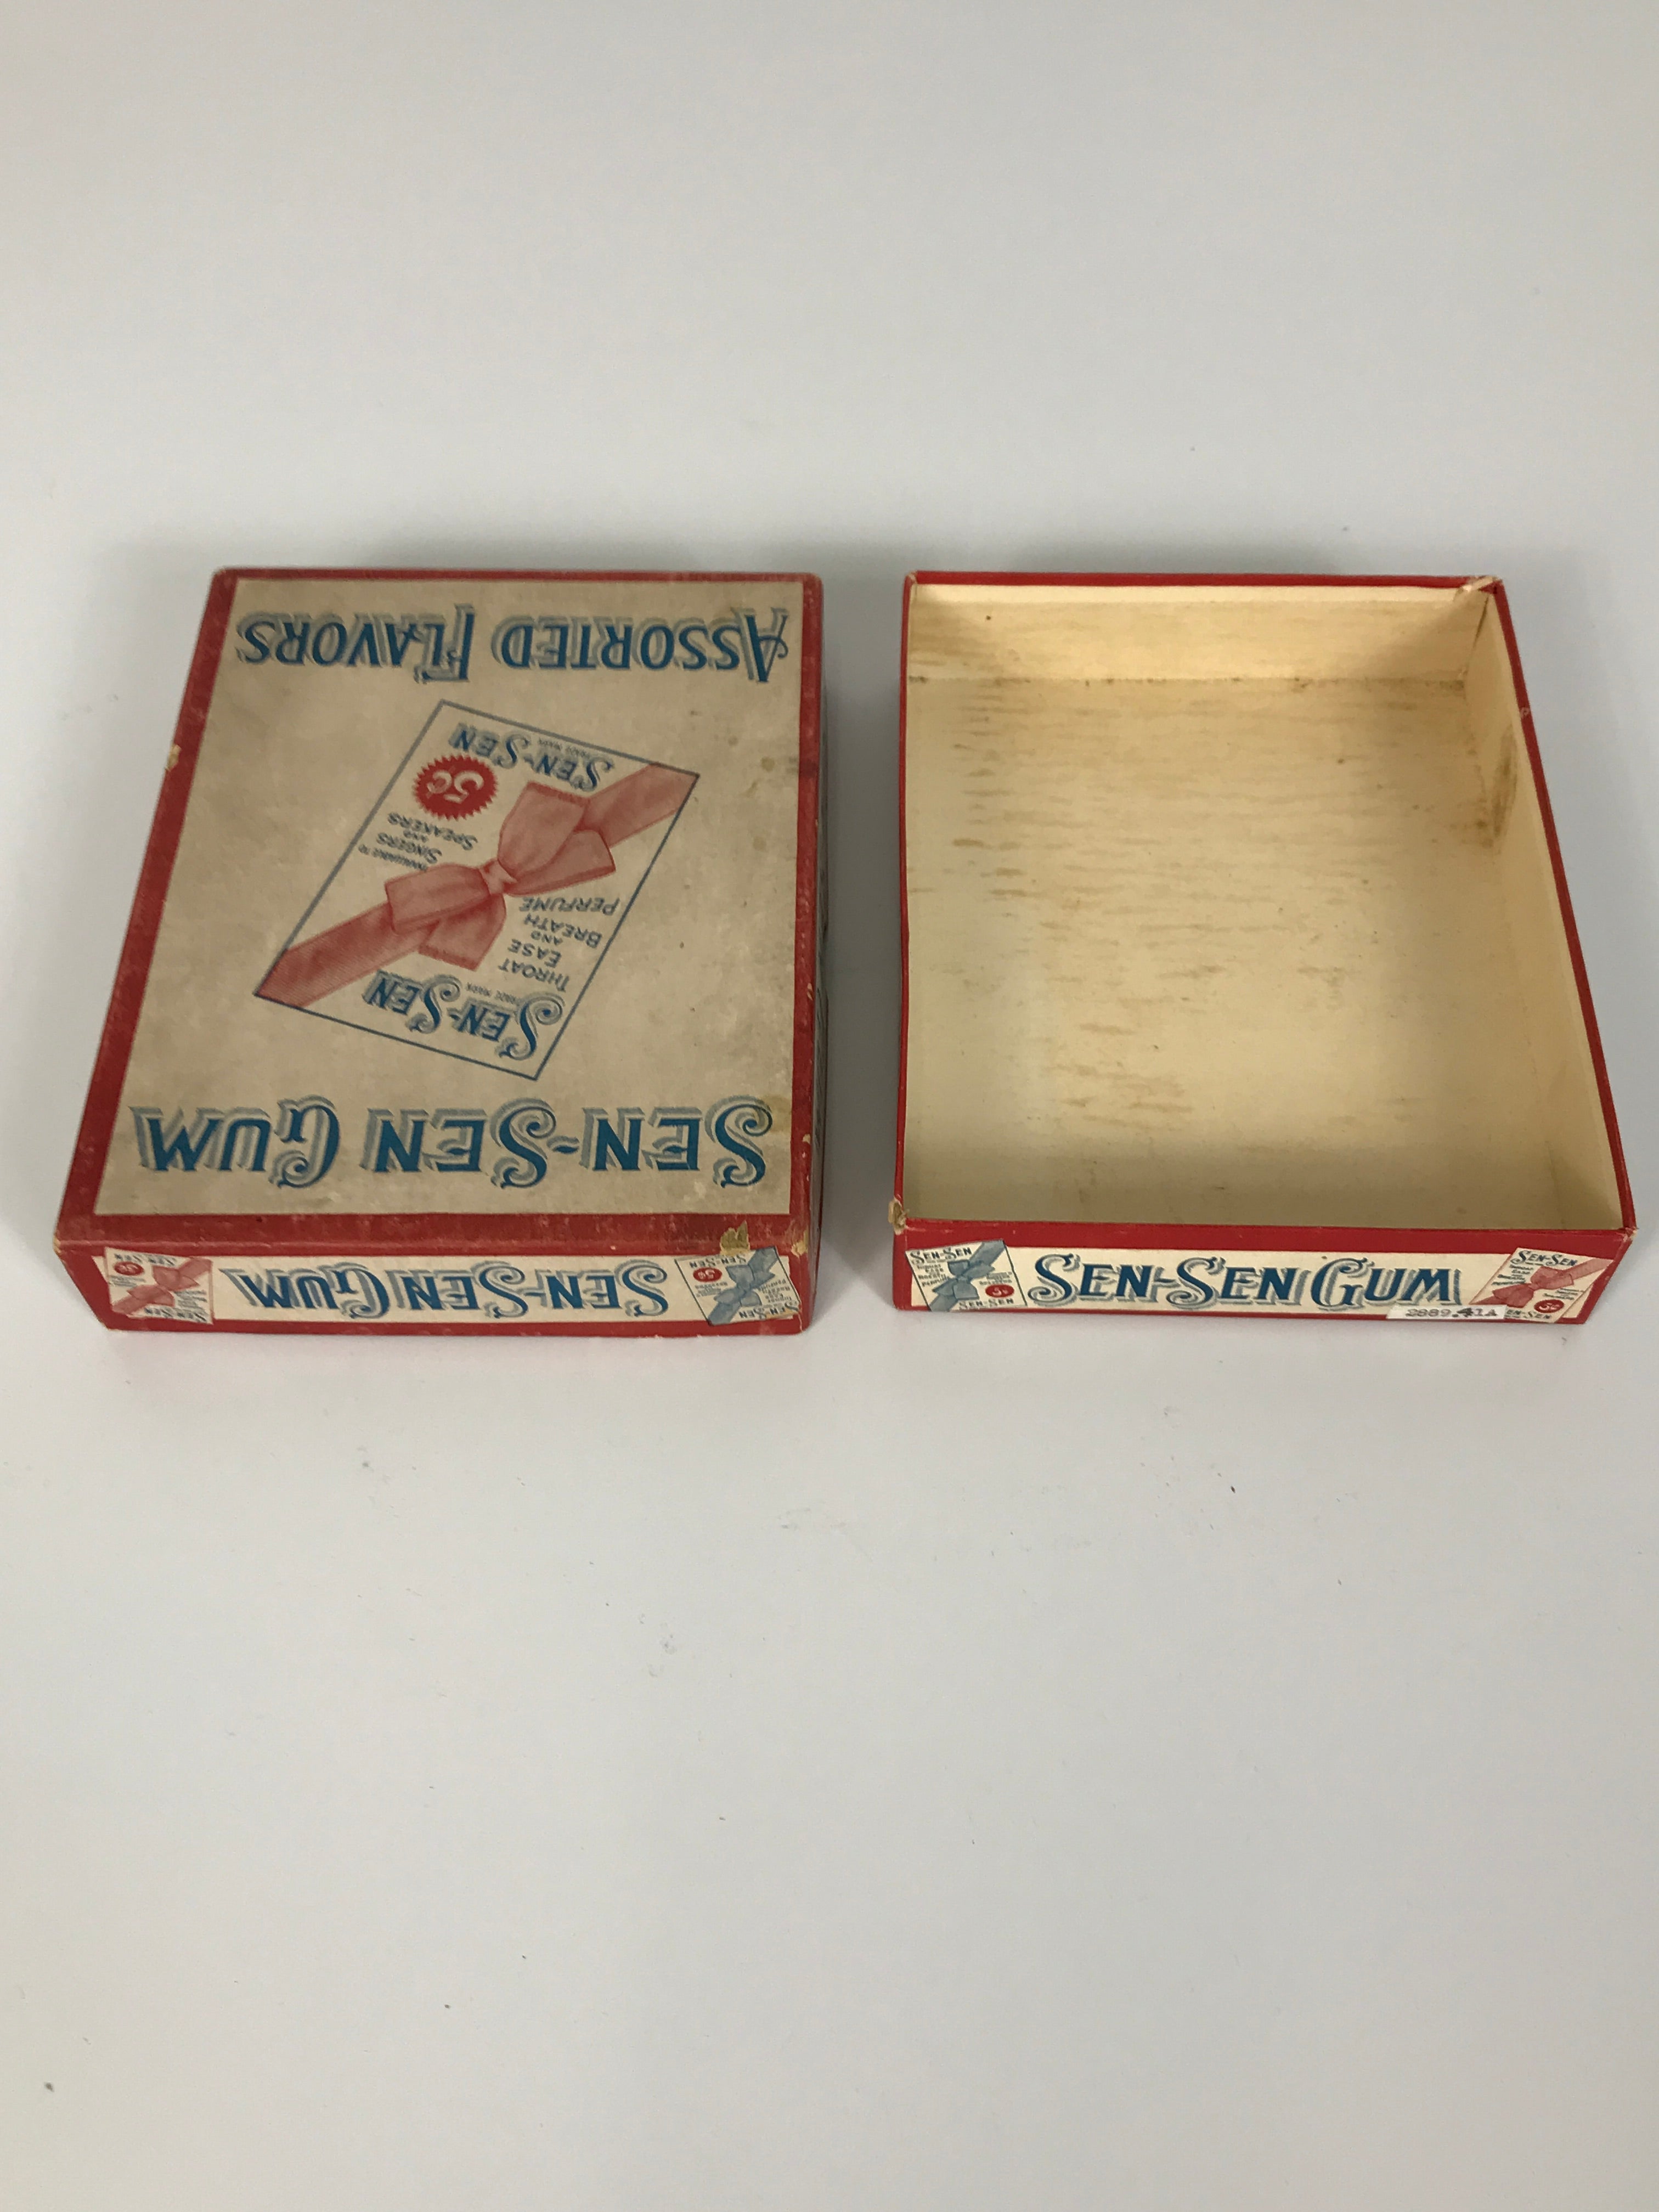 Scarce Antique SEN-SEN 5 Cent Gum Box Empty